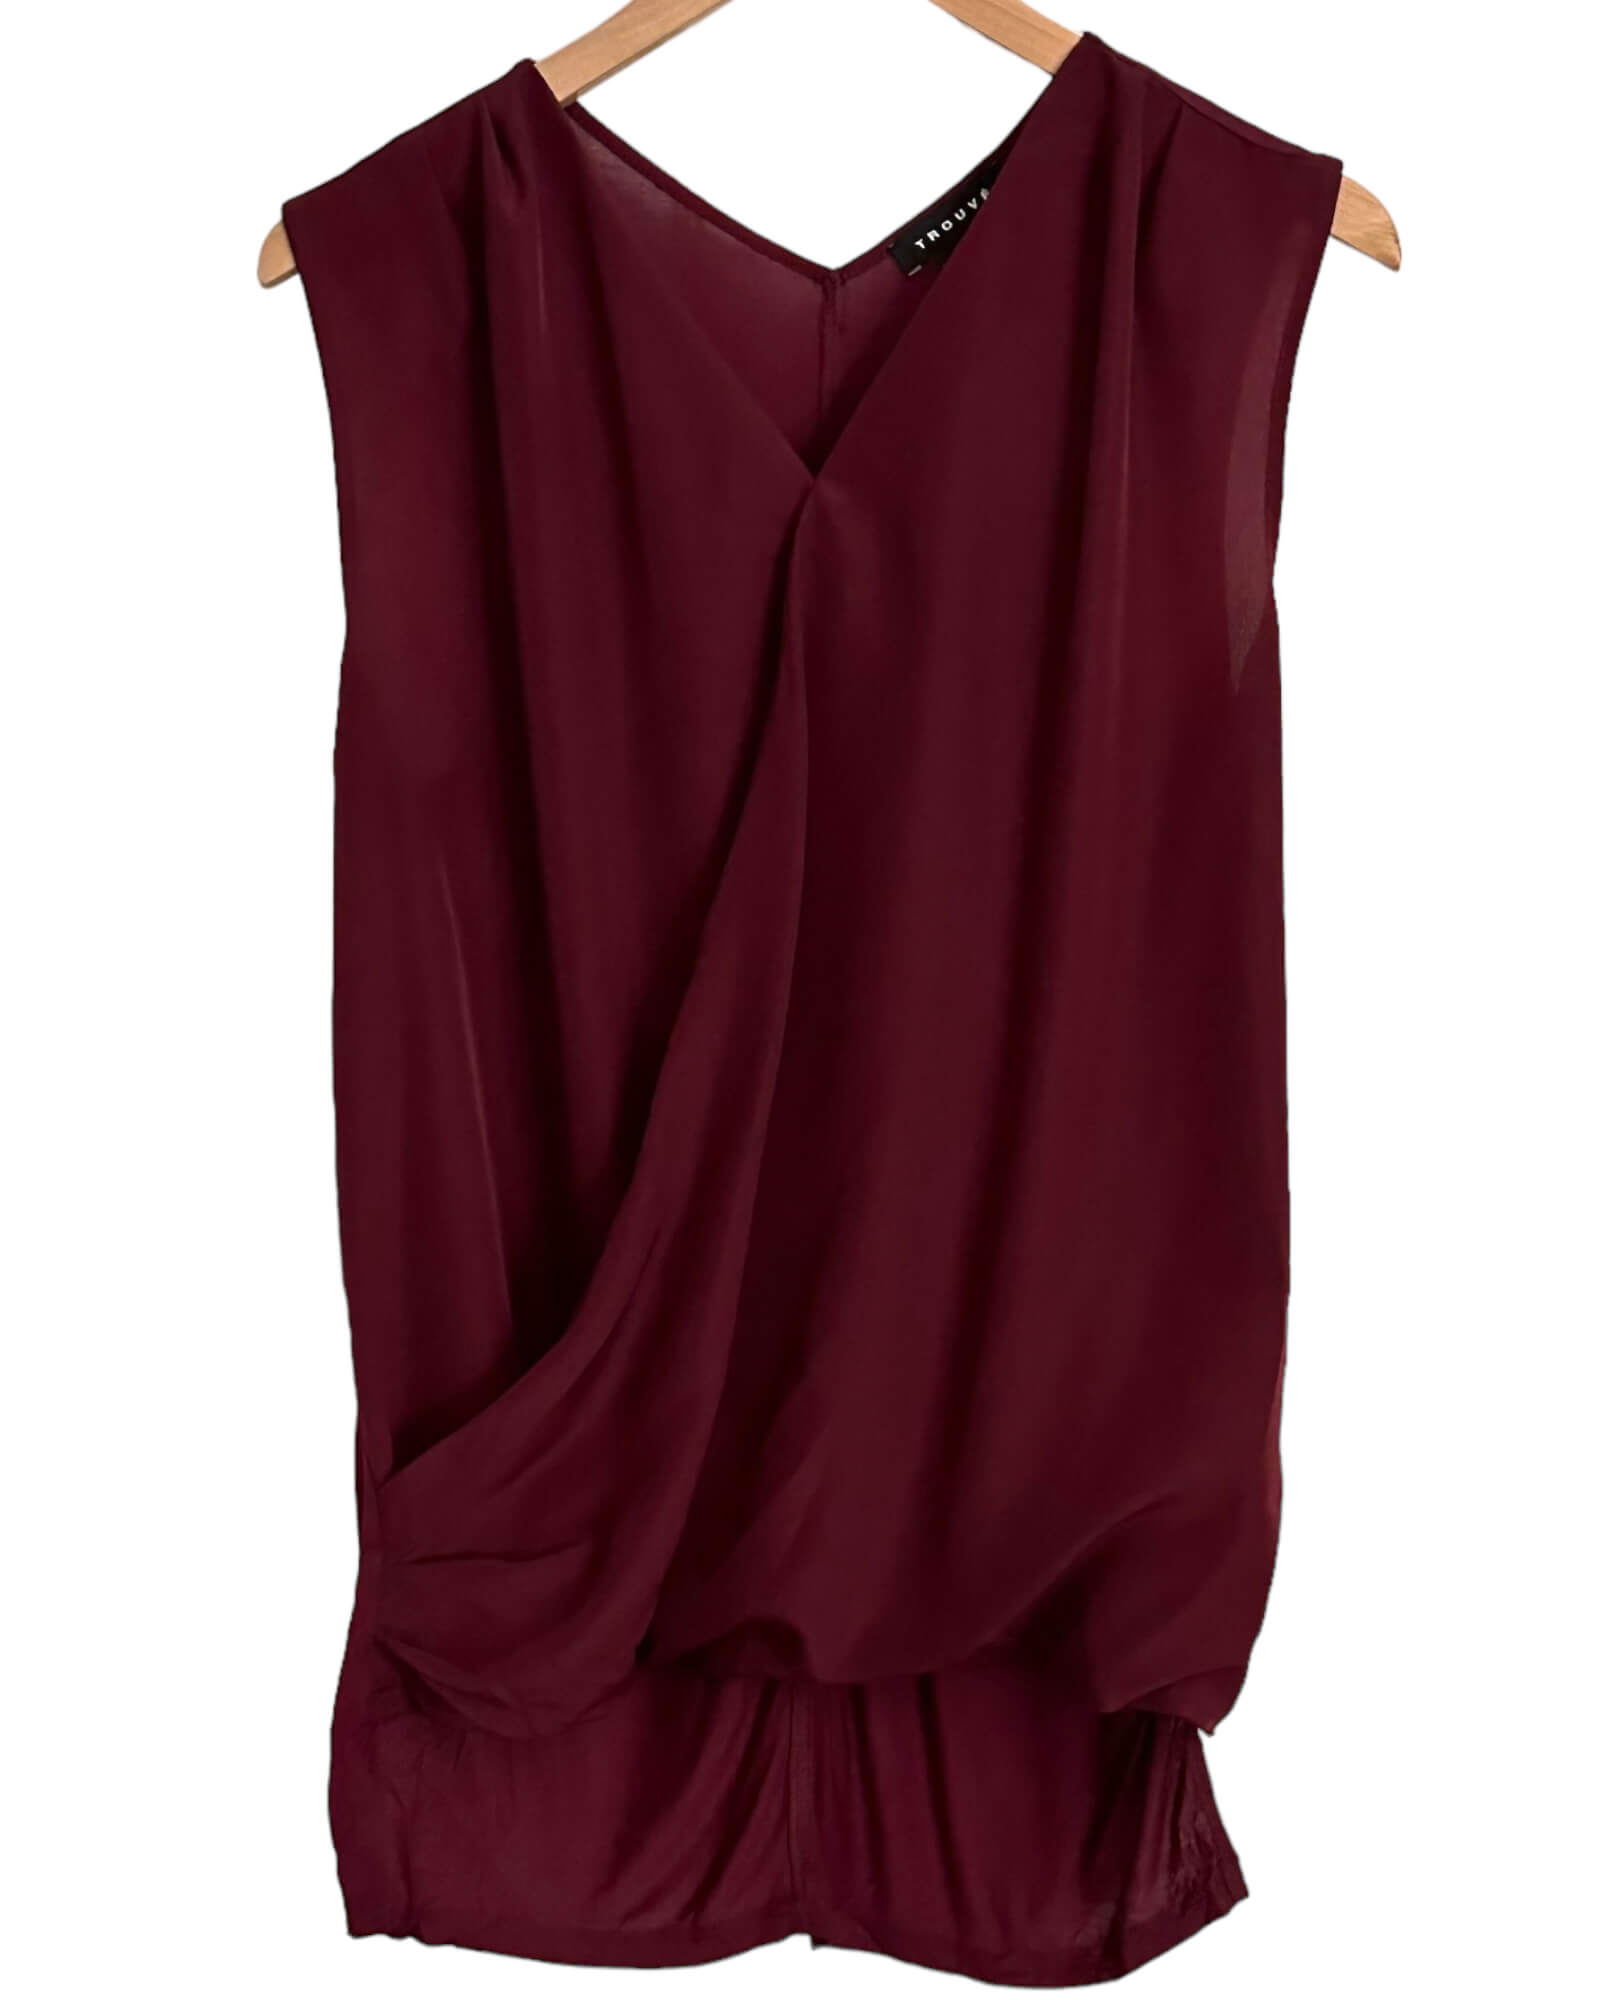 Dark Autumn TROUVE burgundy red sleeveless faux-wrap blouse